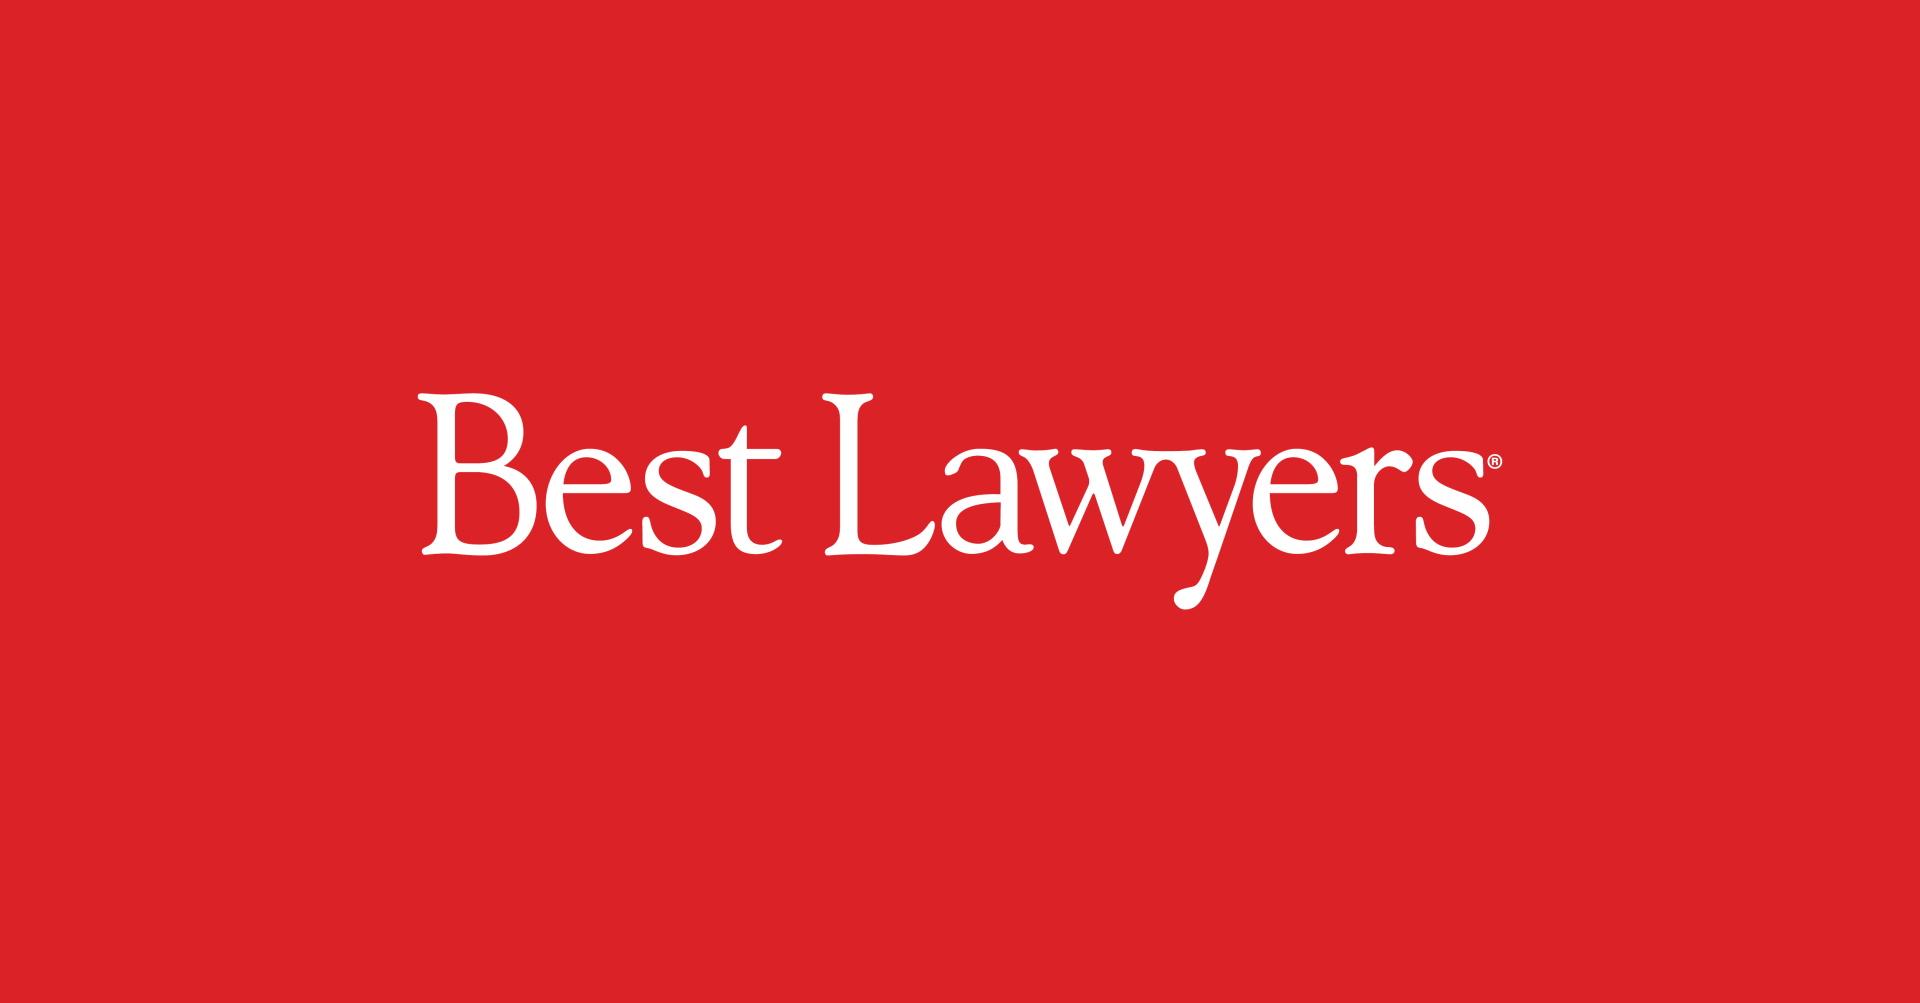 Best lawyers ranking